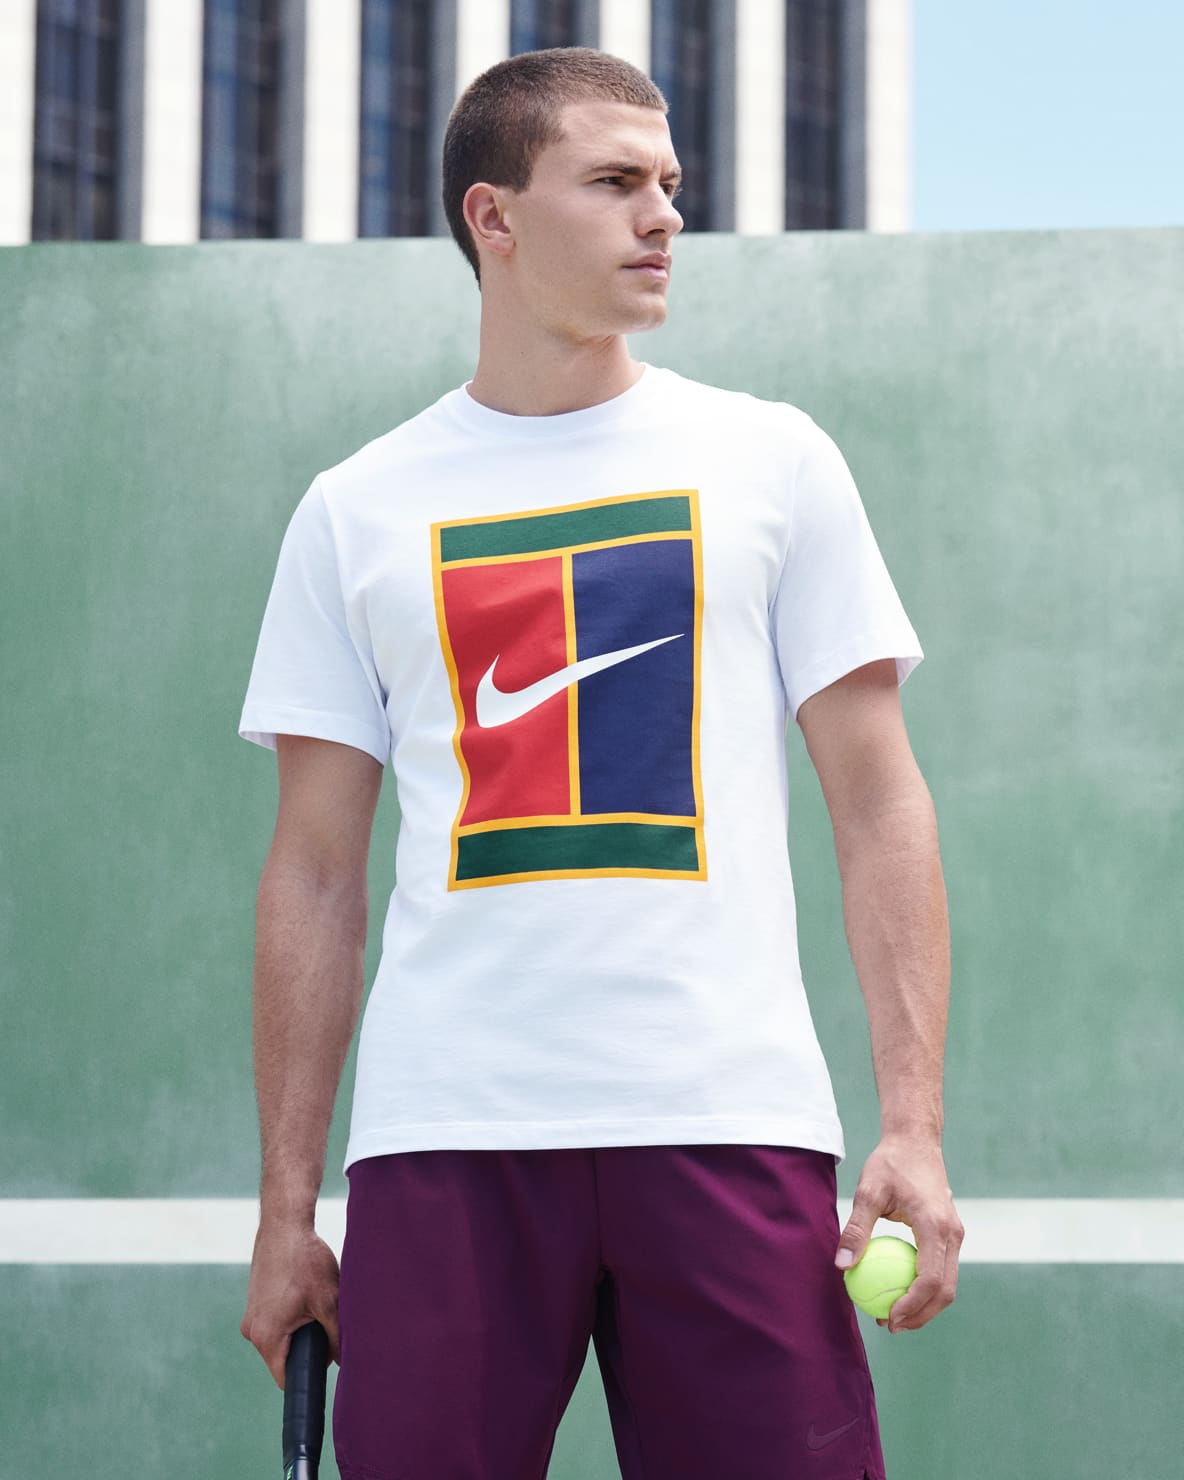 New men's sport Tops tennis/Table tennis clothes set T shirts+shorts 